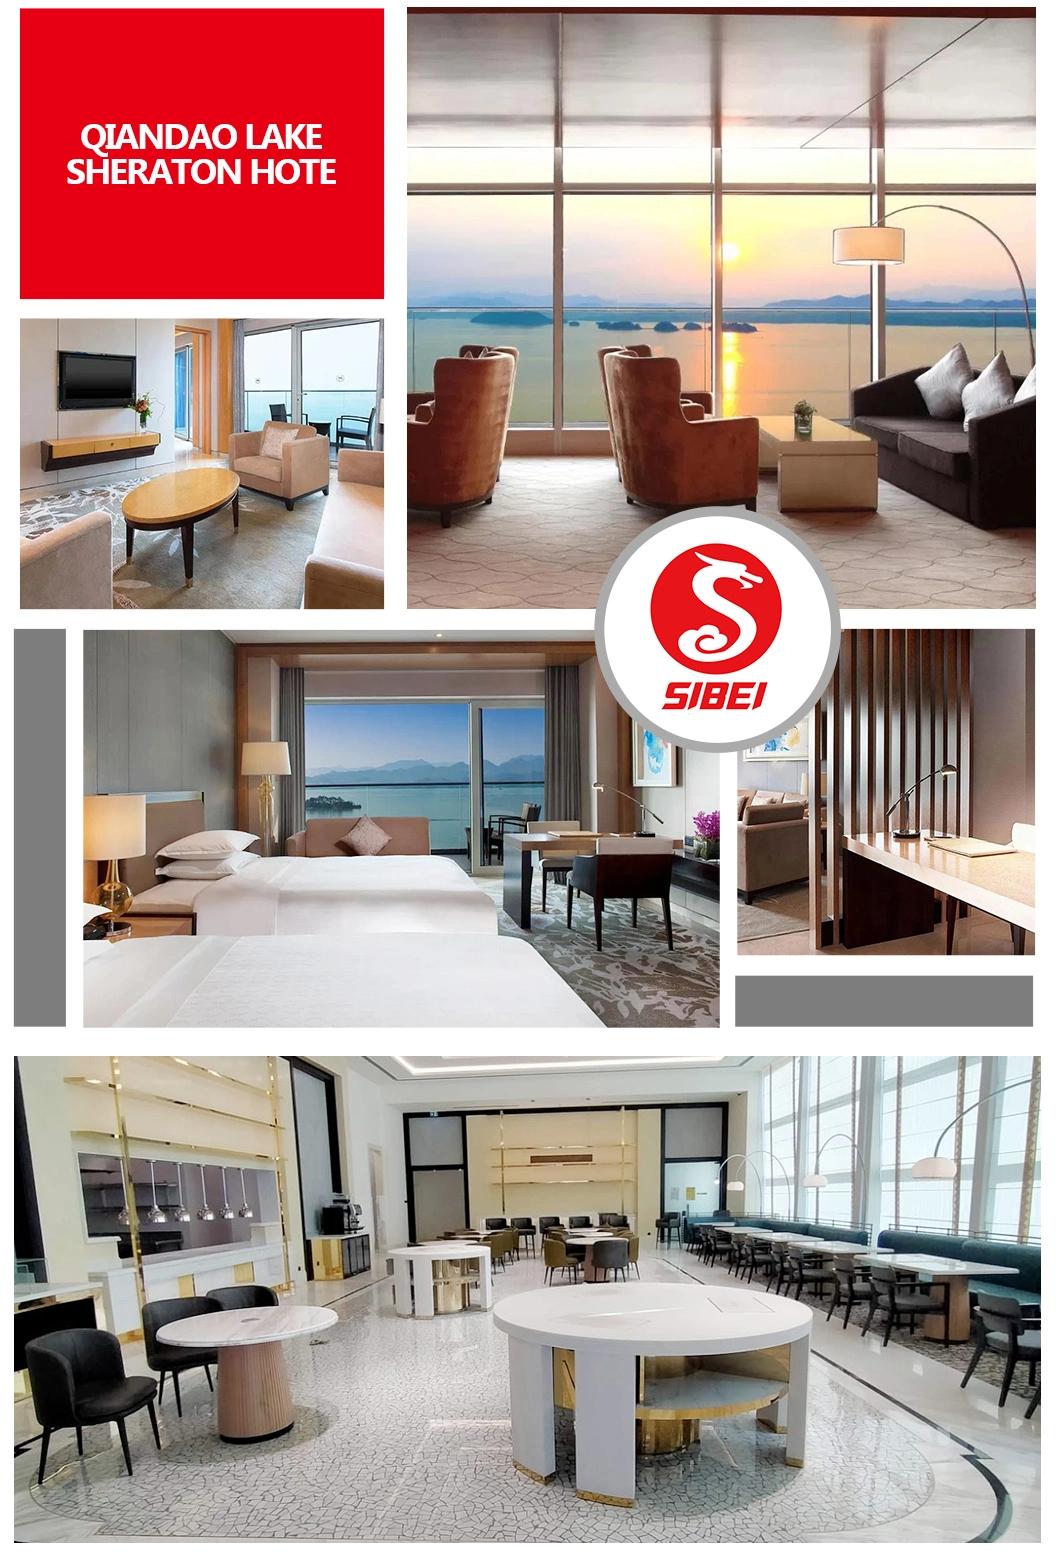 Luxury Suite Furniture Modern Bedroom Furniture Set for Holiday Inn / Resort